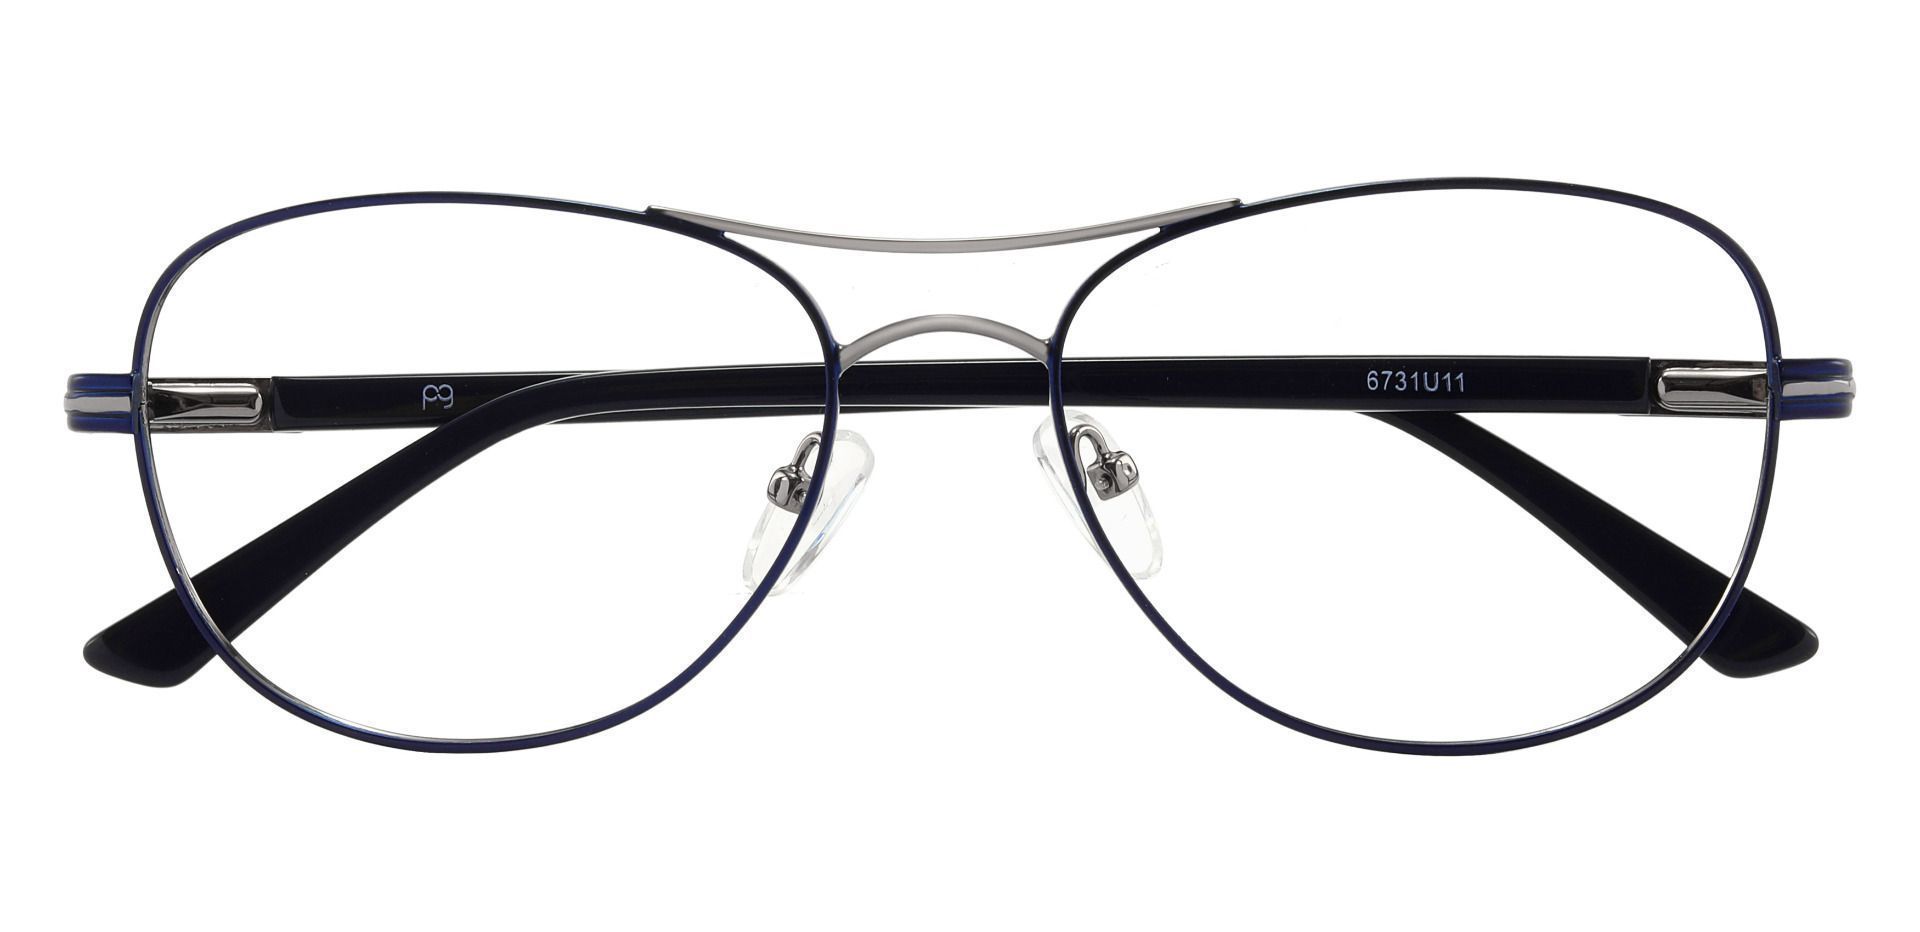 Reeves Aviator Eyeglasses Frame - Blue